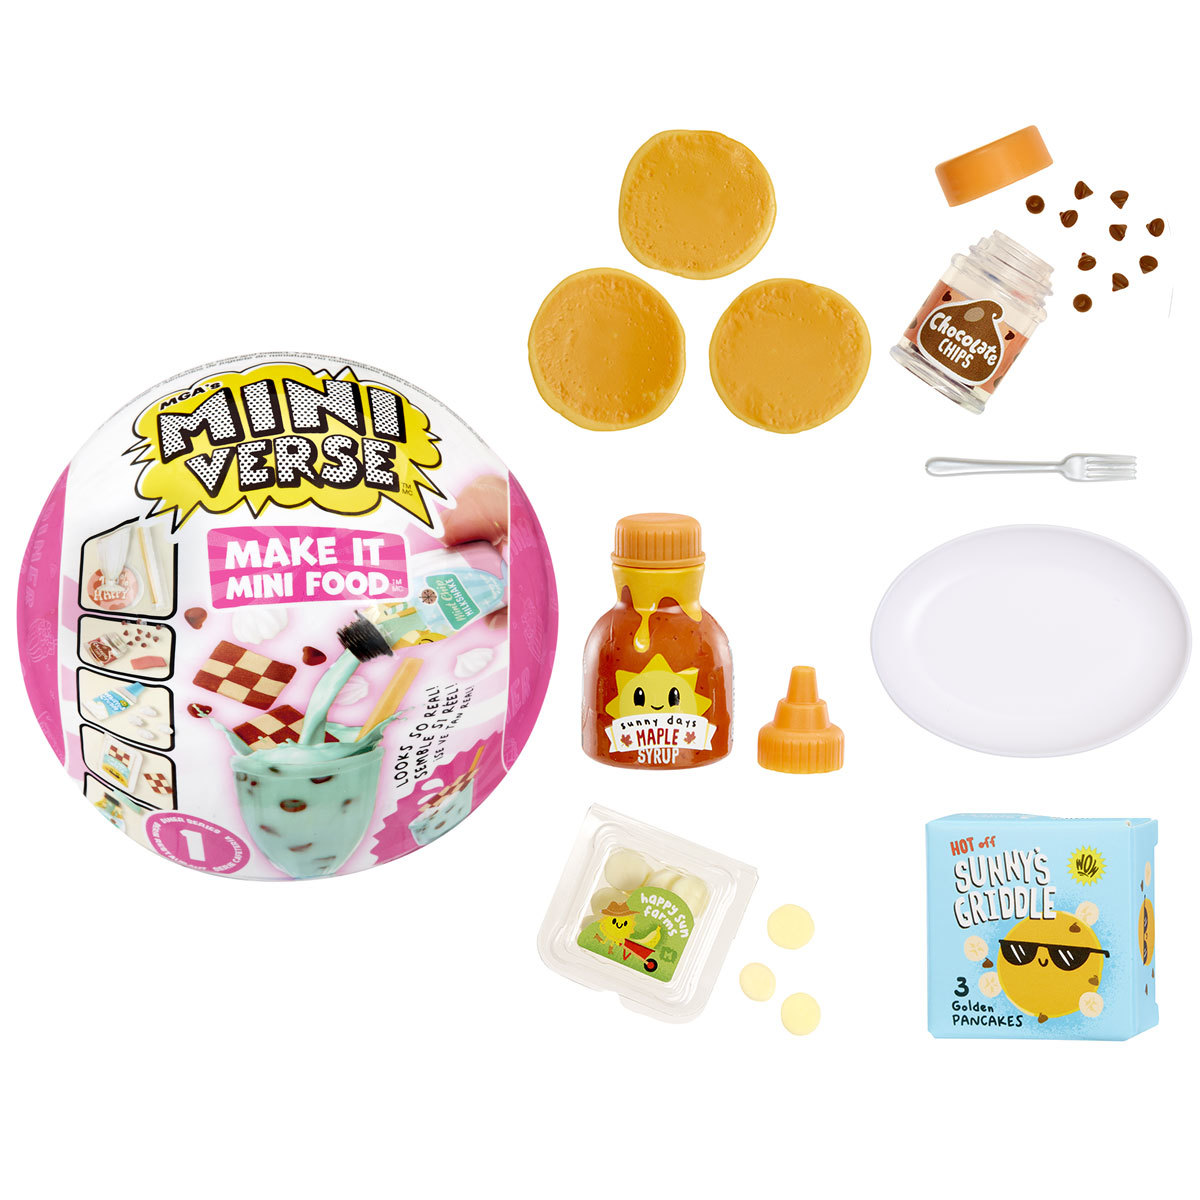 MGA'S MINI VERSE Make It Mini Food Cafe Series 1 Blind Balls New